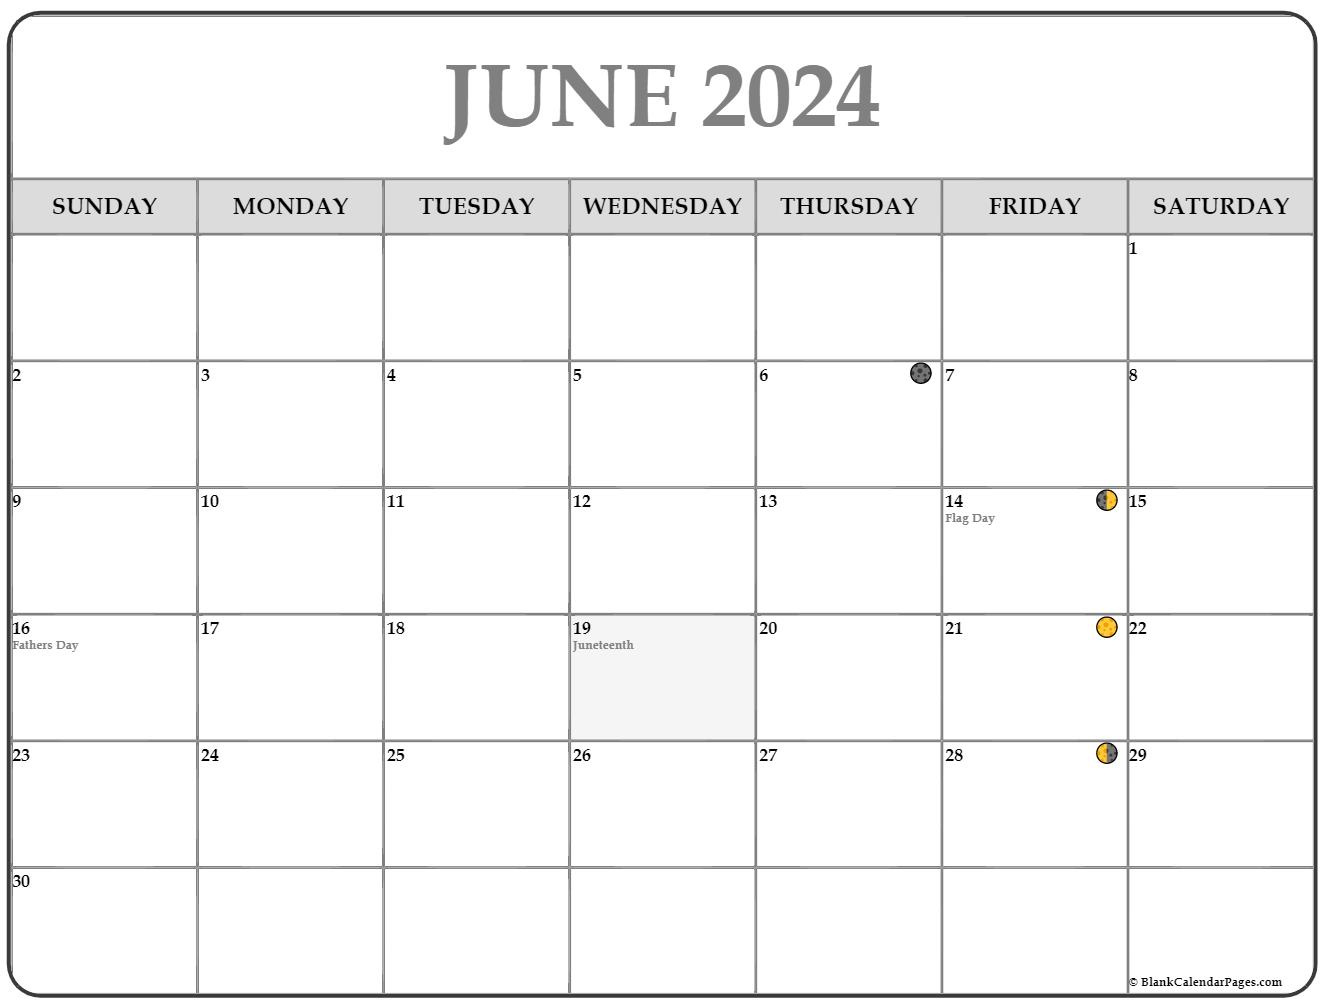 June 2024 Lunar Calendar | Moon Phase Calendar intended for June 2024 Calendar With Moon Phases